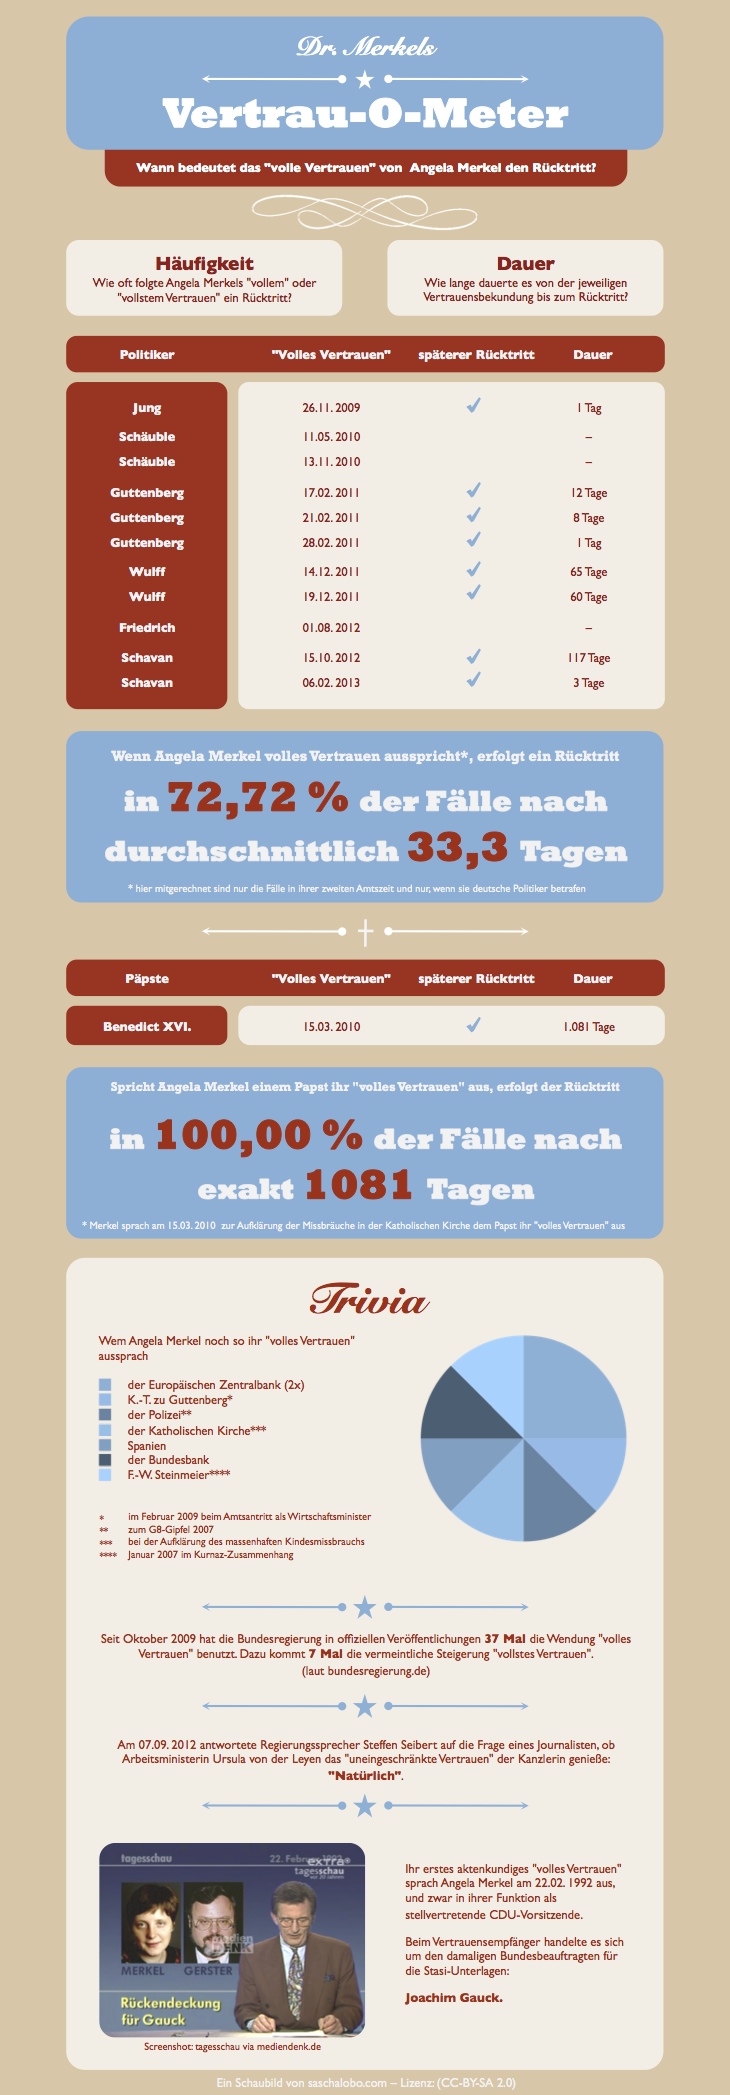 Infografik merkel_volles_vertrauen_papst_edition